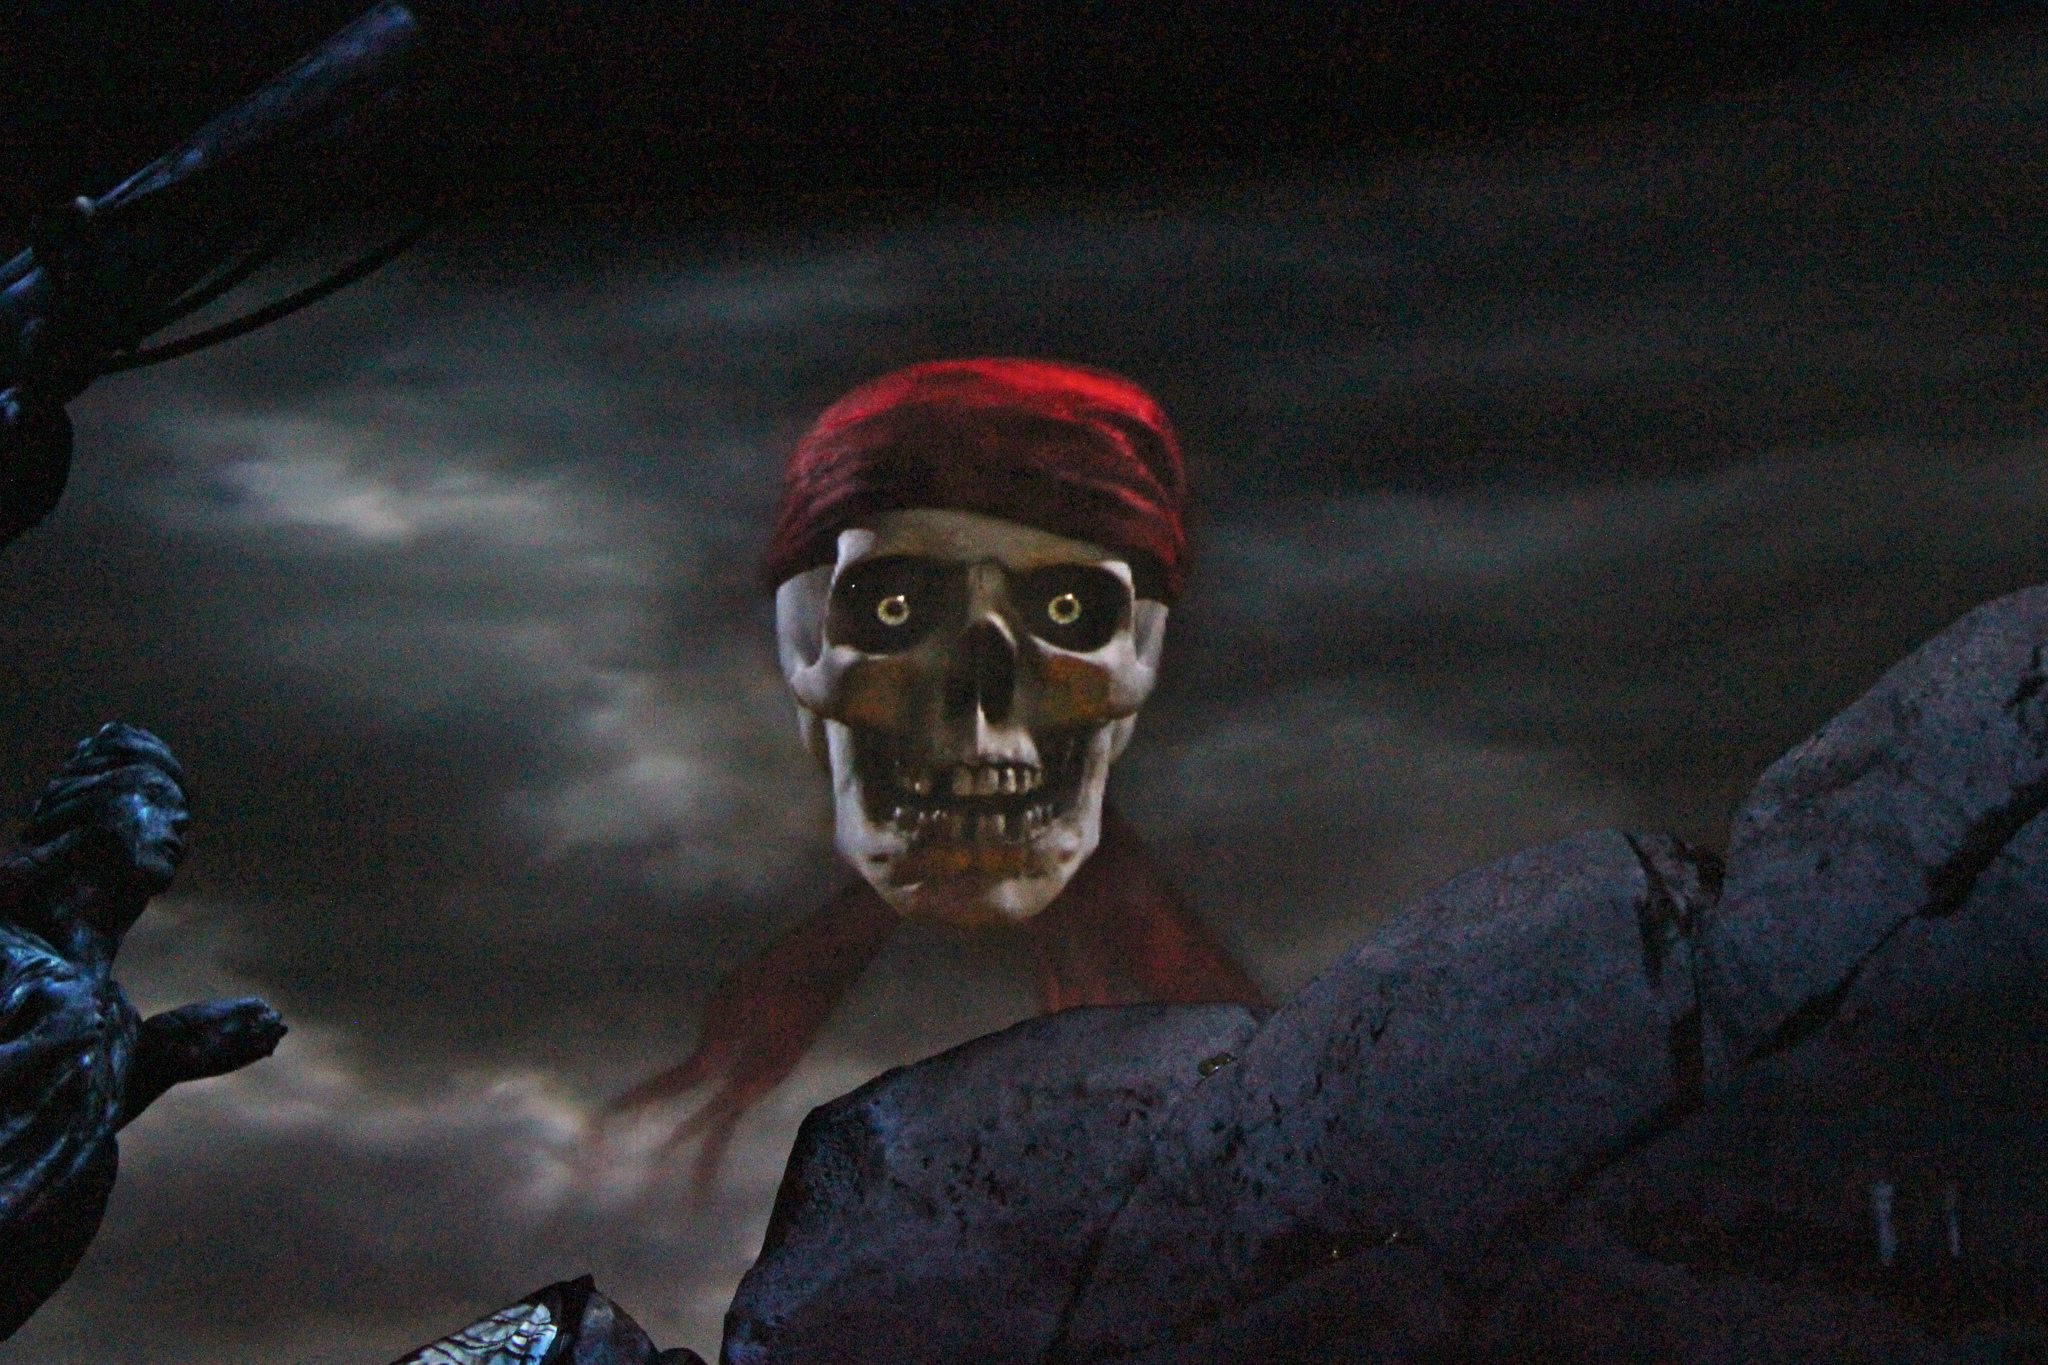 Dead Men Tell No Tales Yo Ho Yo Ho A Pirates Life For Me Skull